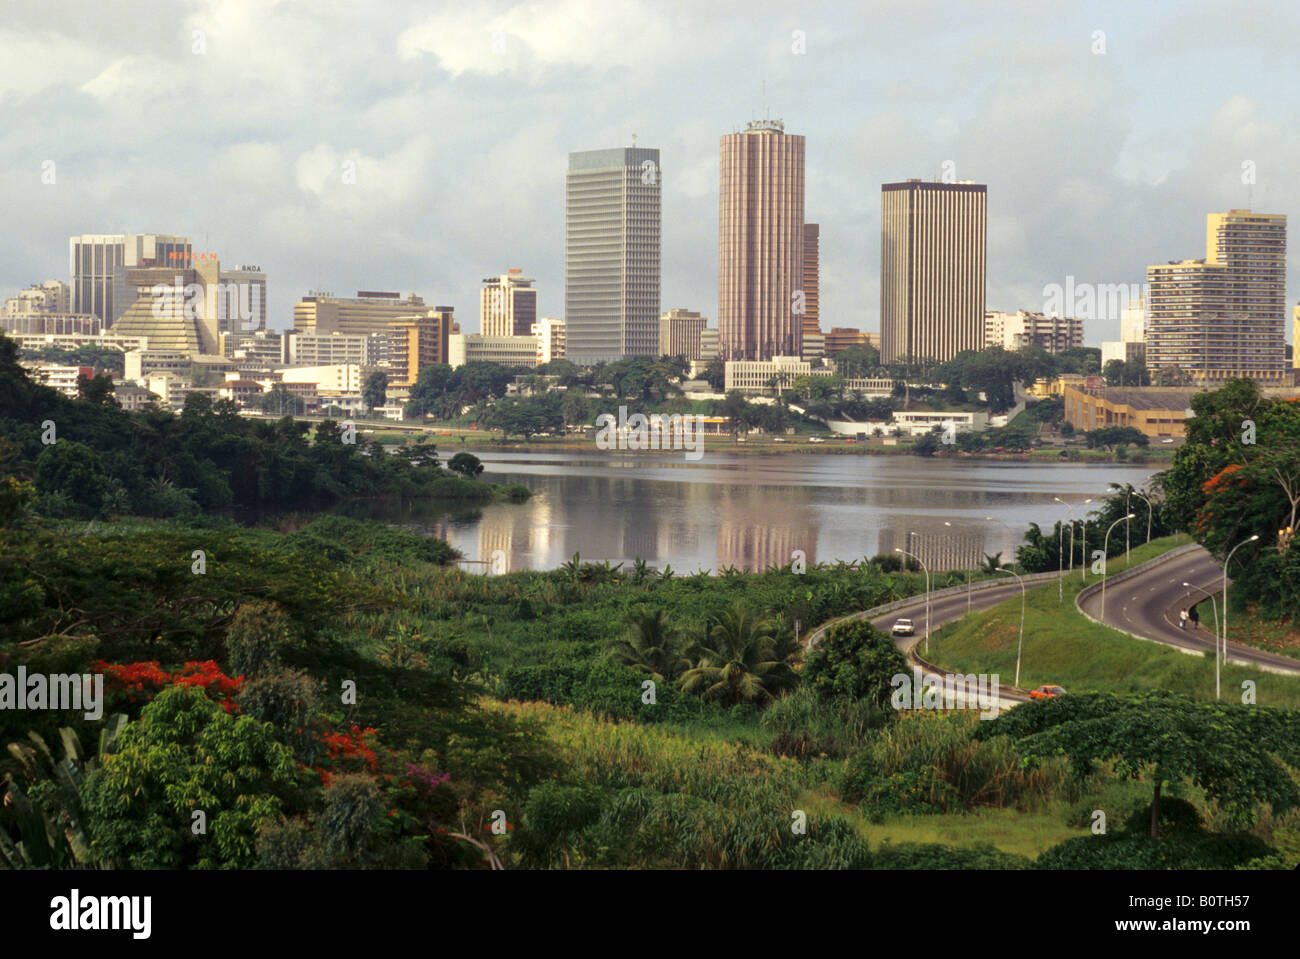 Juice terrorist Efternavn Abidjan, Cote d'Ivoire, Ivory Coast, West Africa. Skyline View of Plateau  Commercial Area across Lagoon from Cocody Stock Photo - Alamy